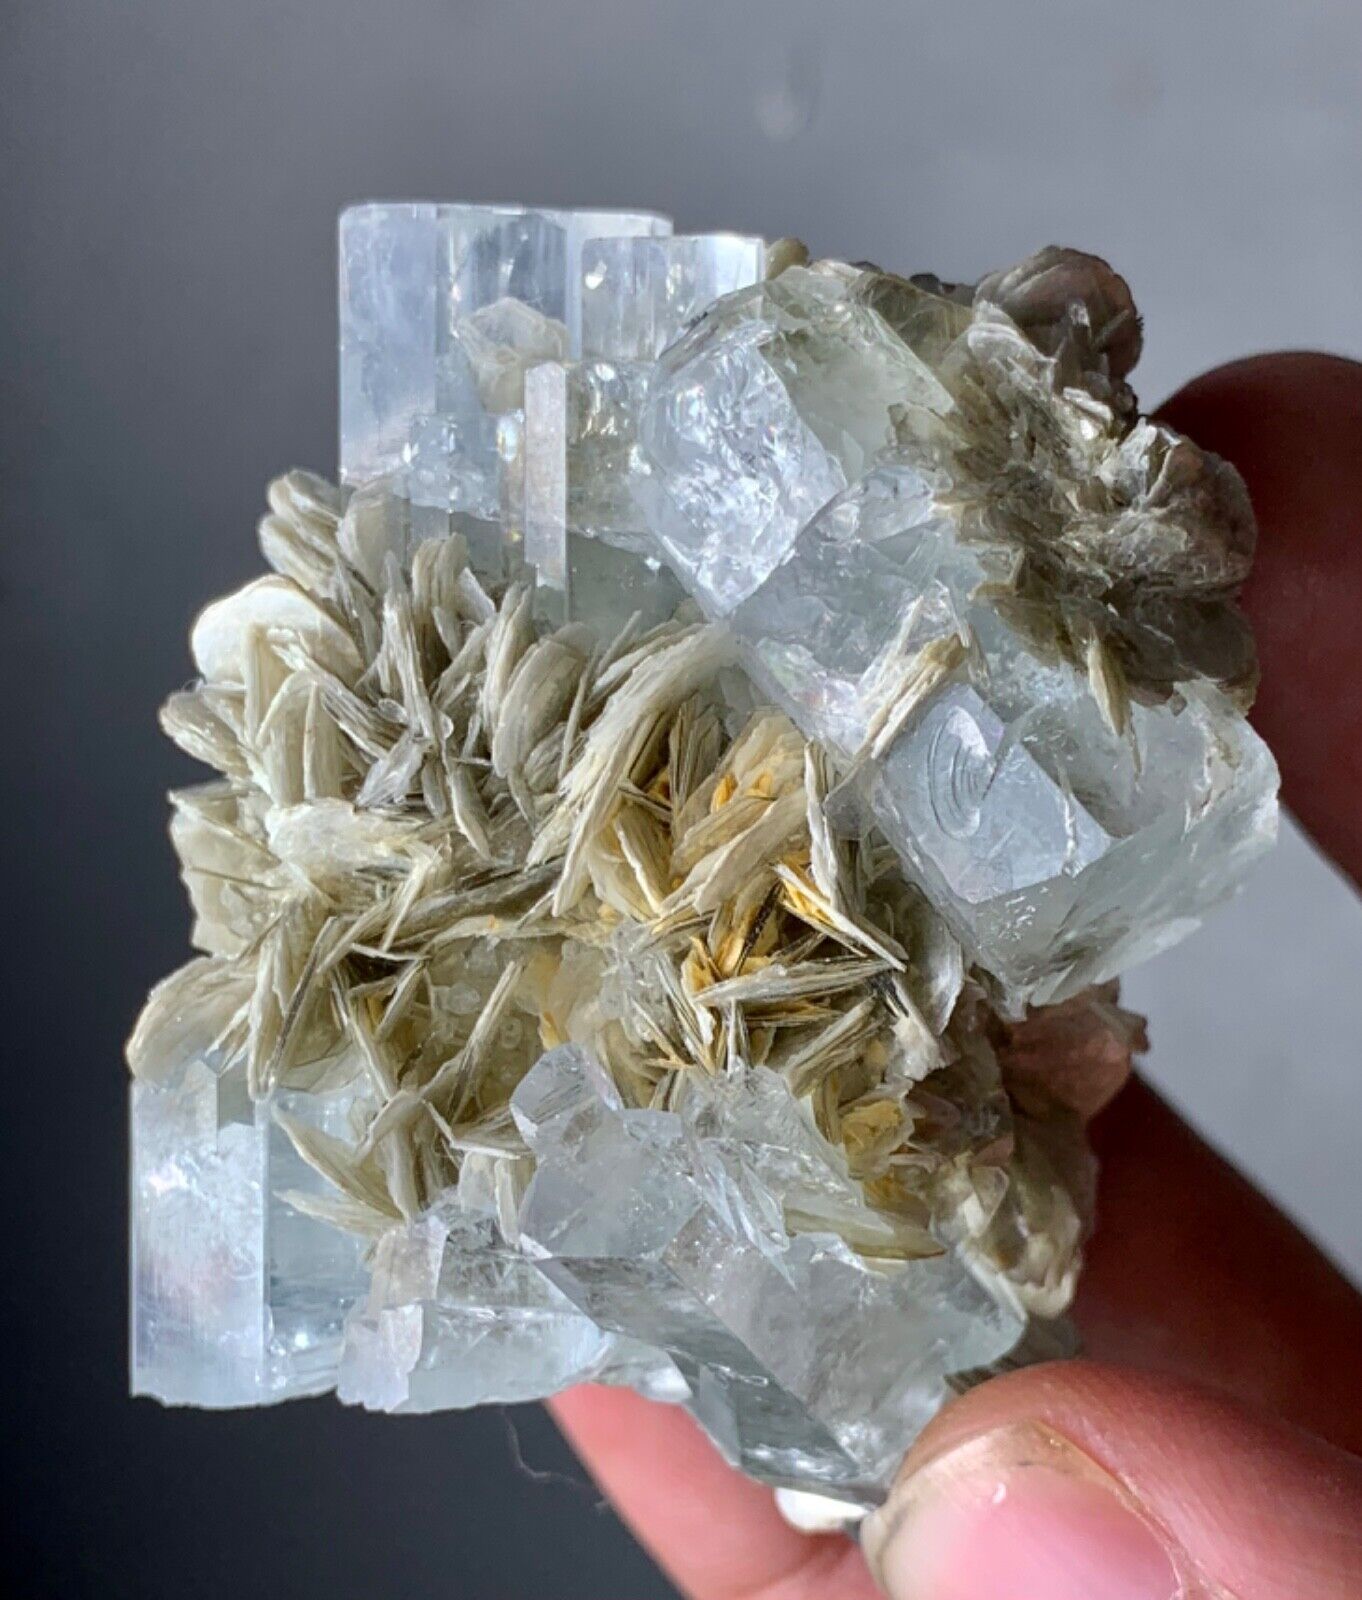 398 Carats Terminated Aquamarine Crystal Specimen From Skardu Pakistan